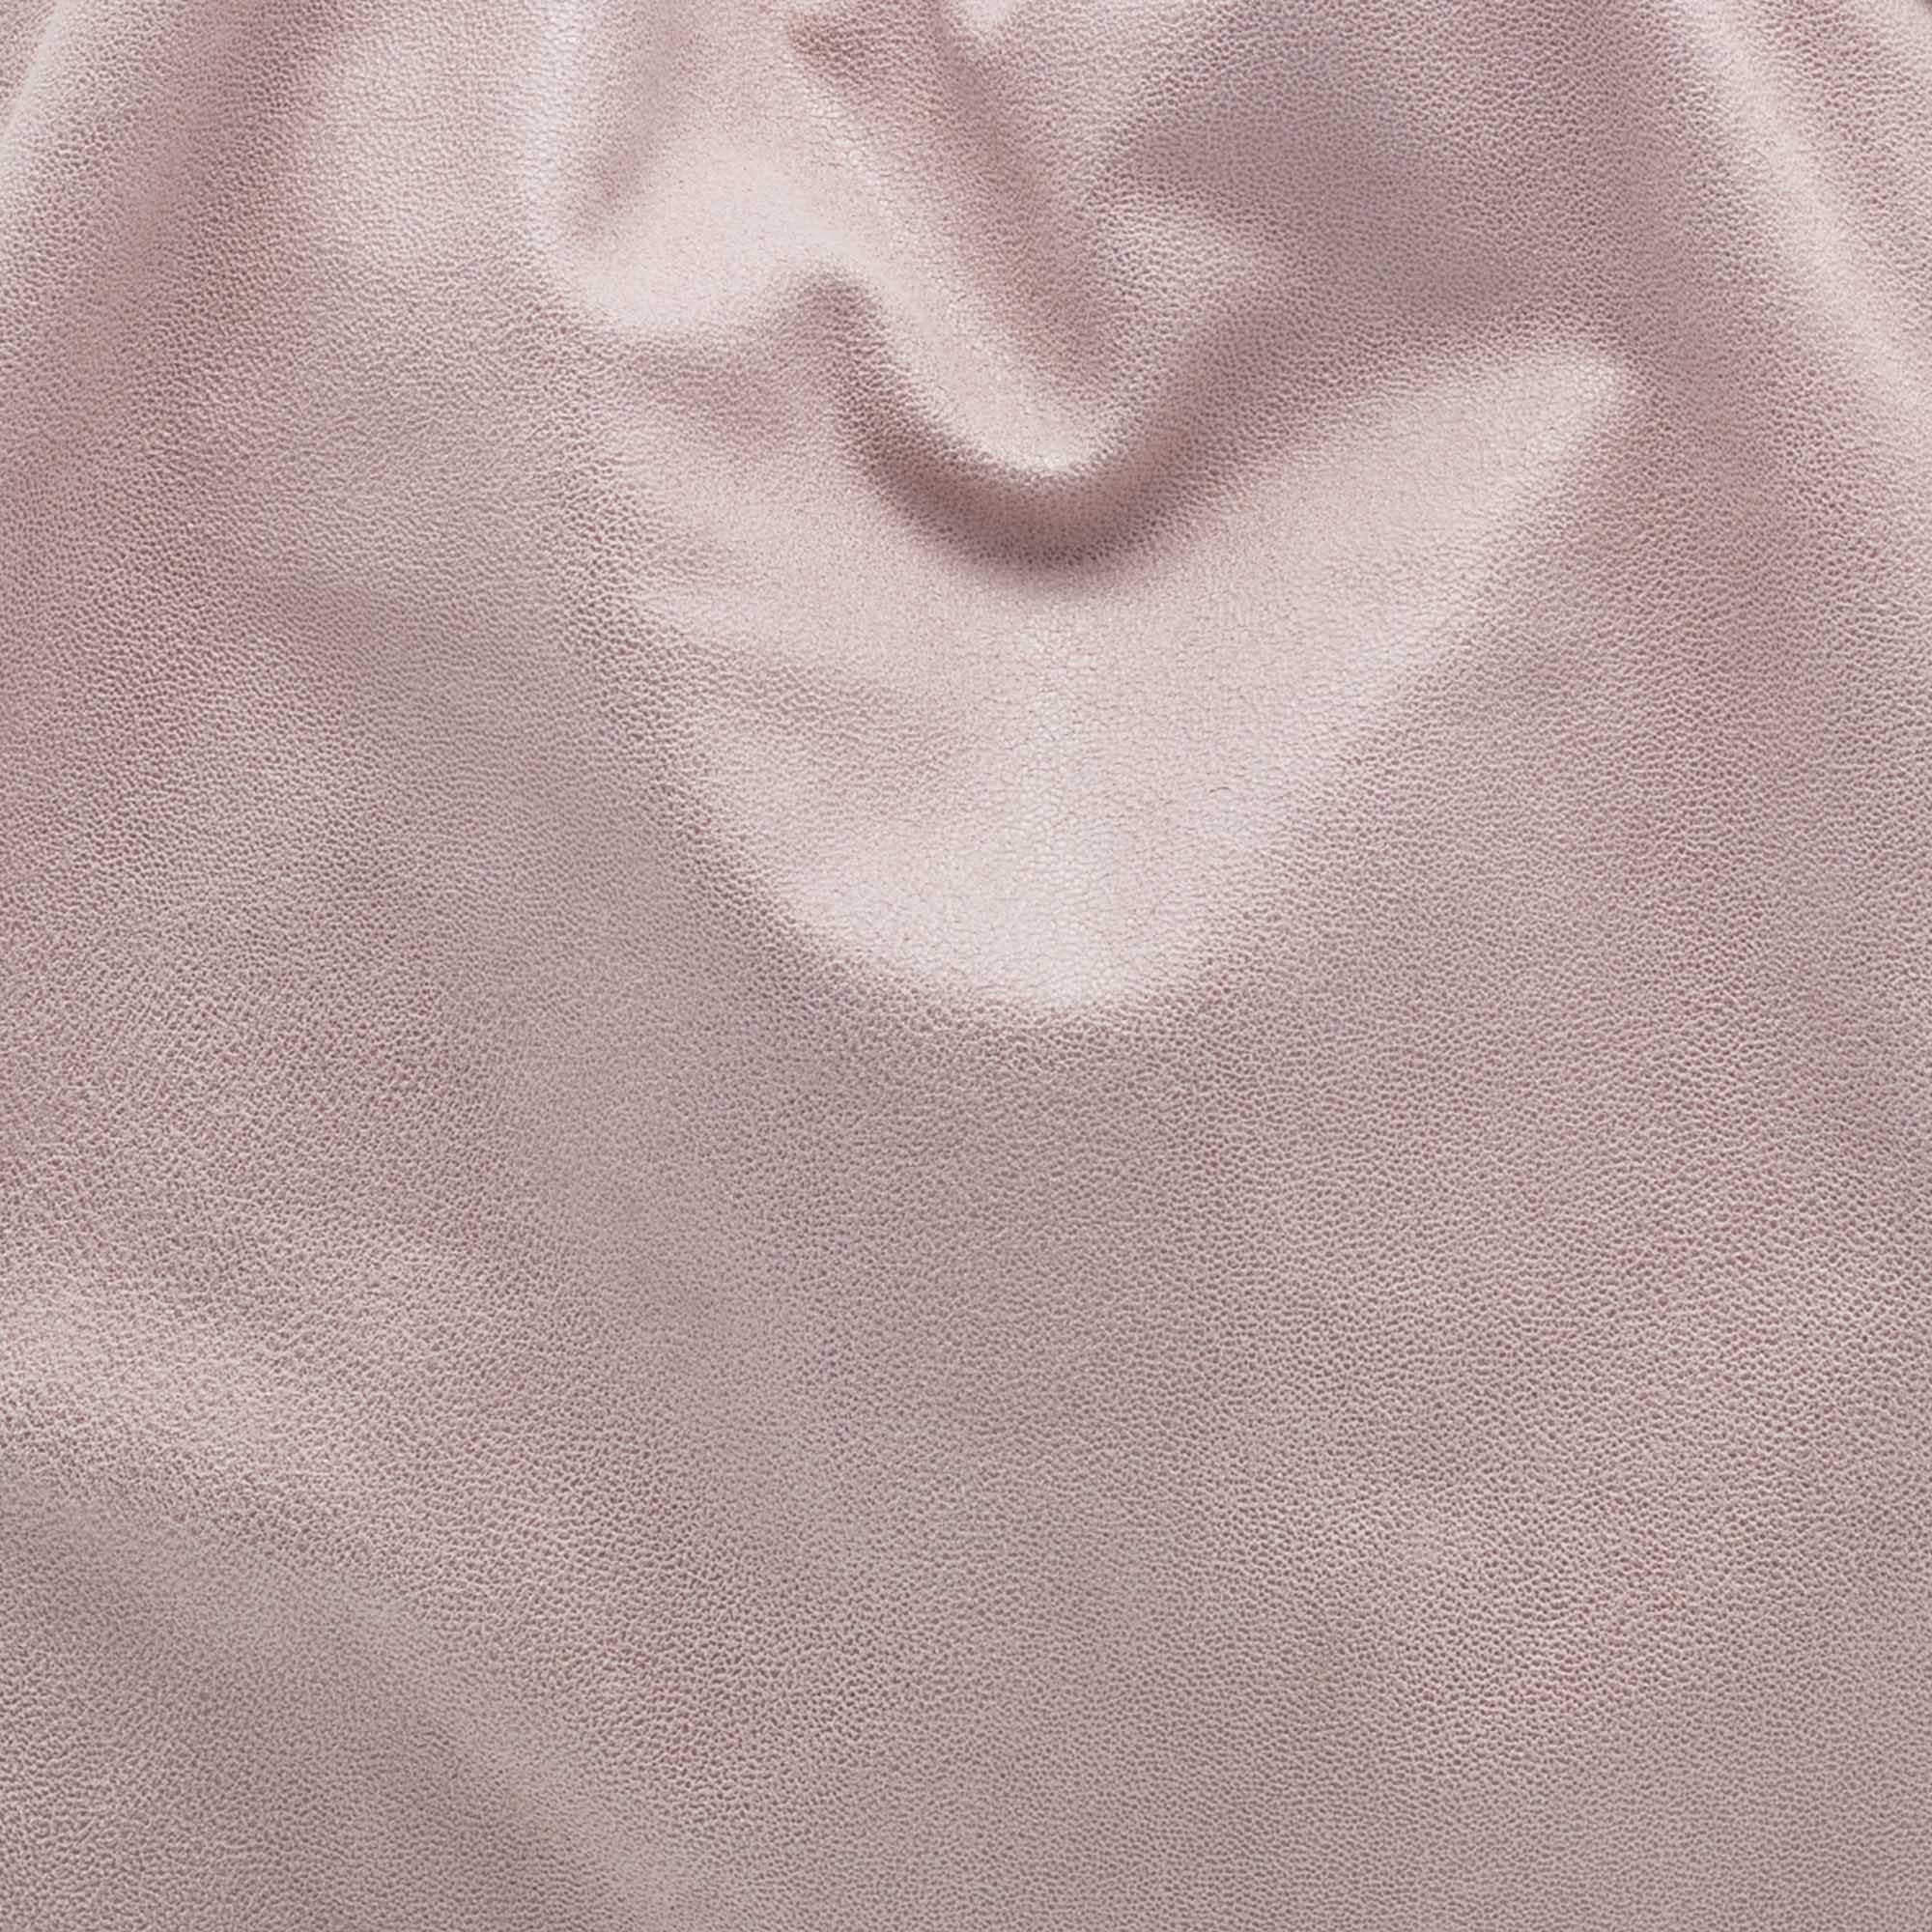 Stella McCartney Light Pink Faux Leather Falabella Tote 2